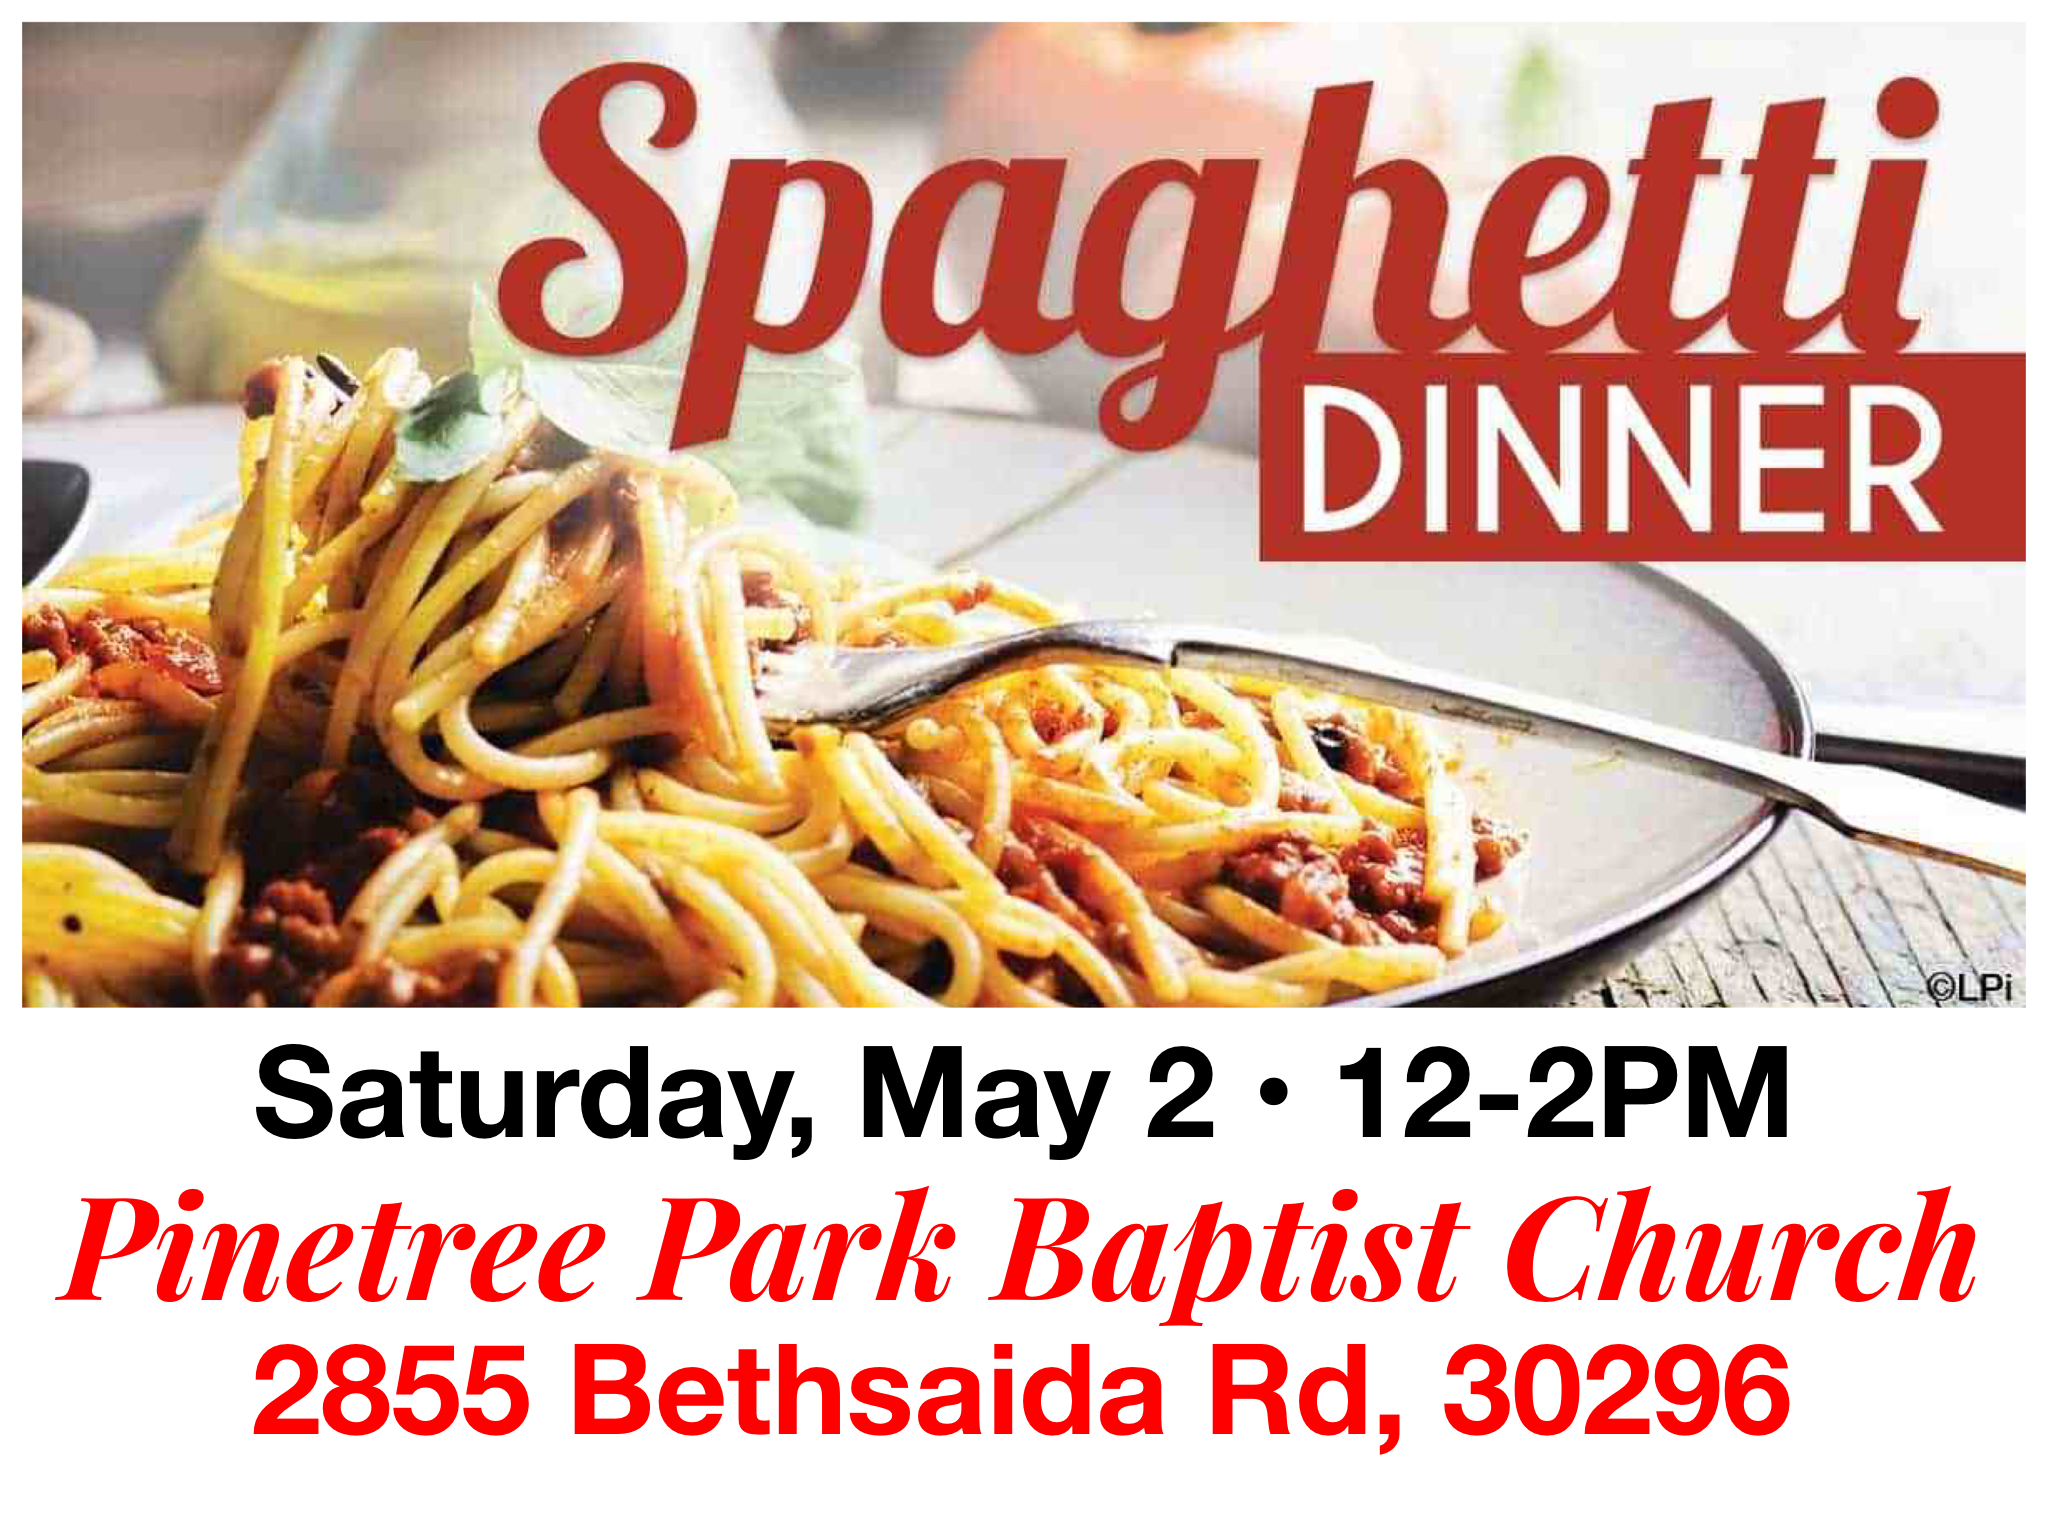 pinetree park baptist church spaghetti dinner